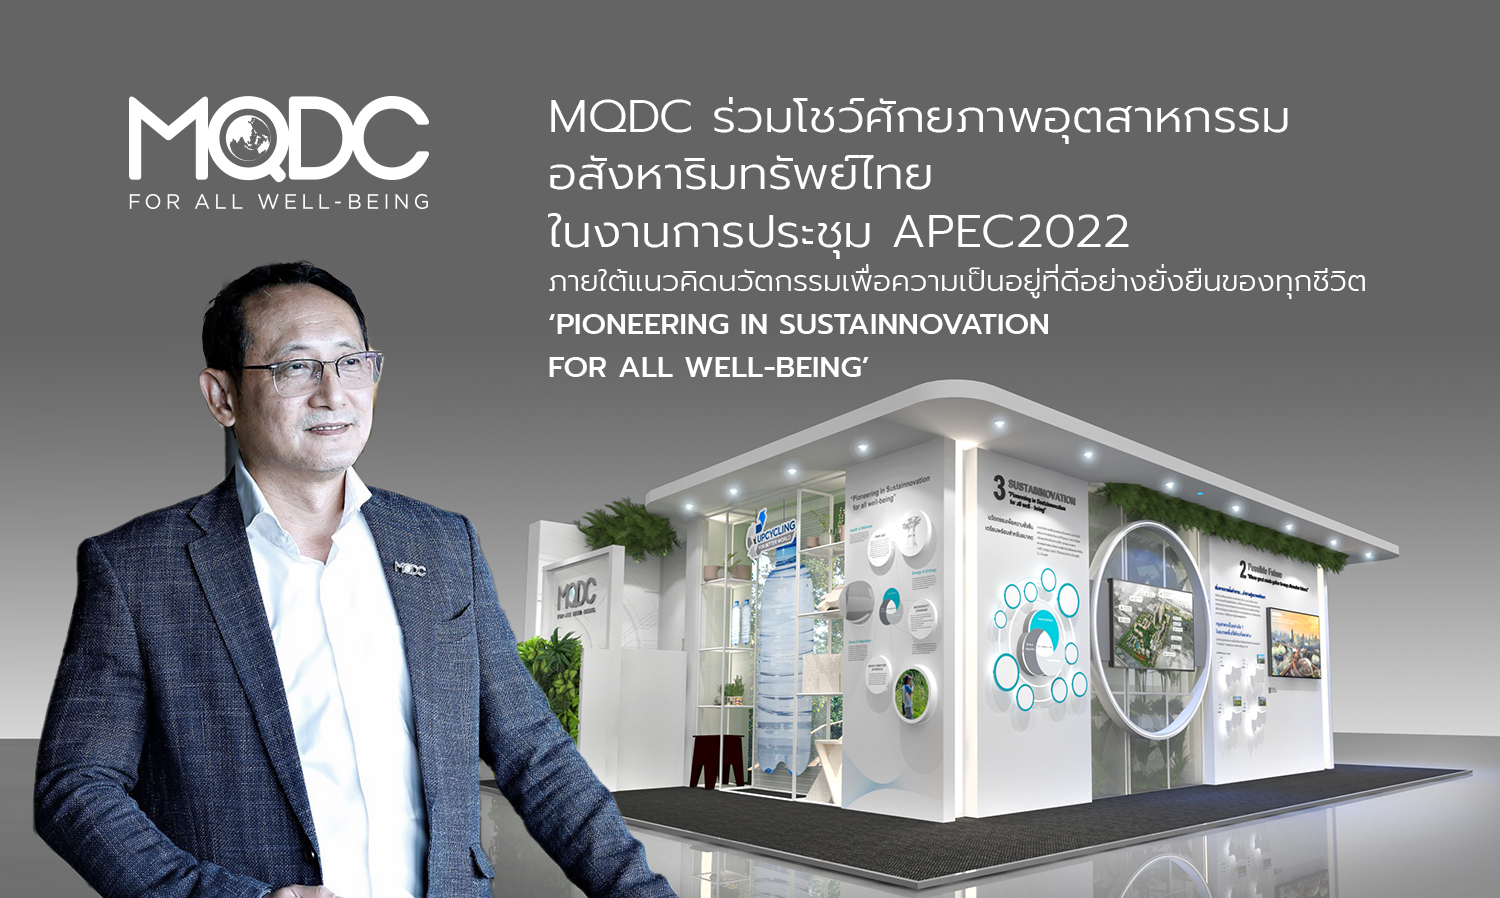 MQDC ร่วมโชว์ศักยภาพอุตสาหกรรมอสังหาริมทรัพย์ไทยในงานการประชุม APEC2022 ภายใต้แนวคิดนวัตกรรมเพื่อความเป็นอยู่ที่ดีอย่างยั่งยืนของทุกชีวิต ‘Pioneering in Sustainnovation for All Well-being’